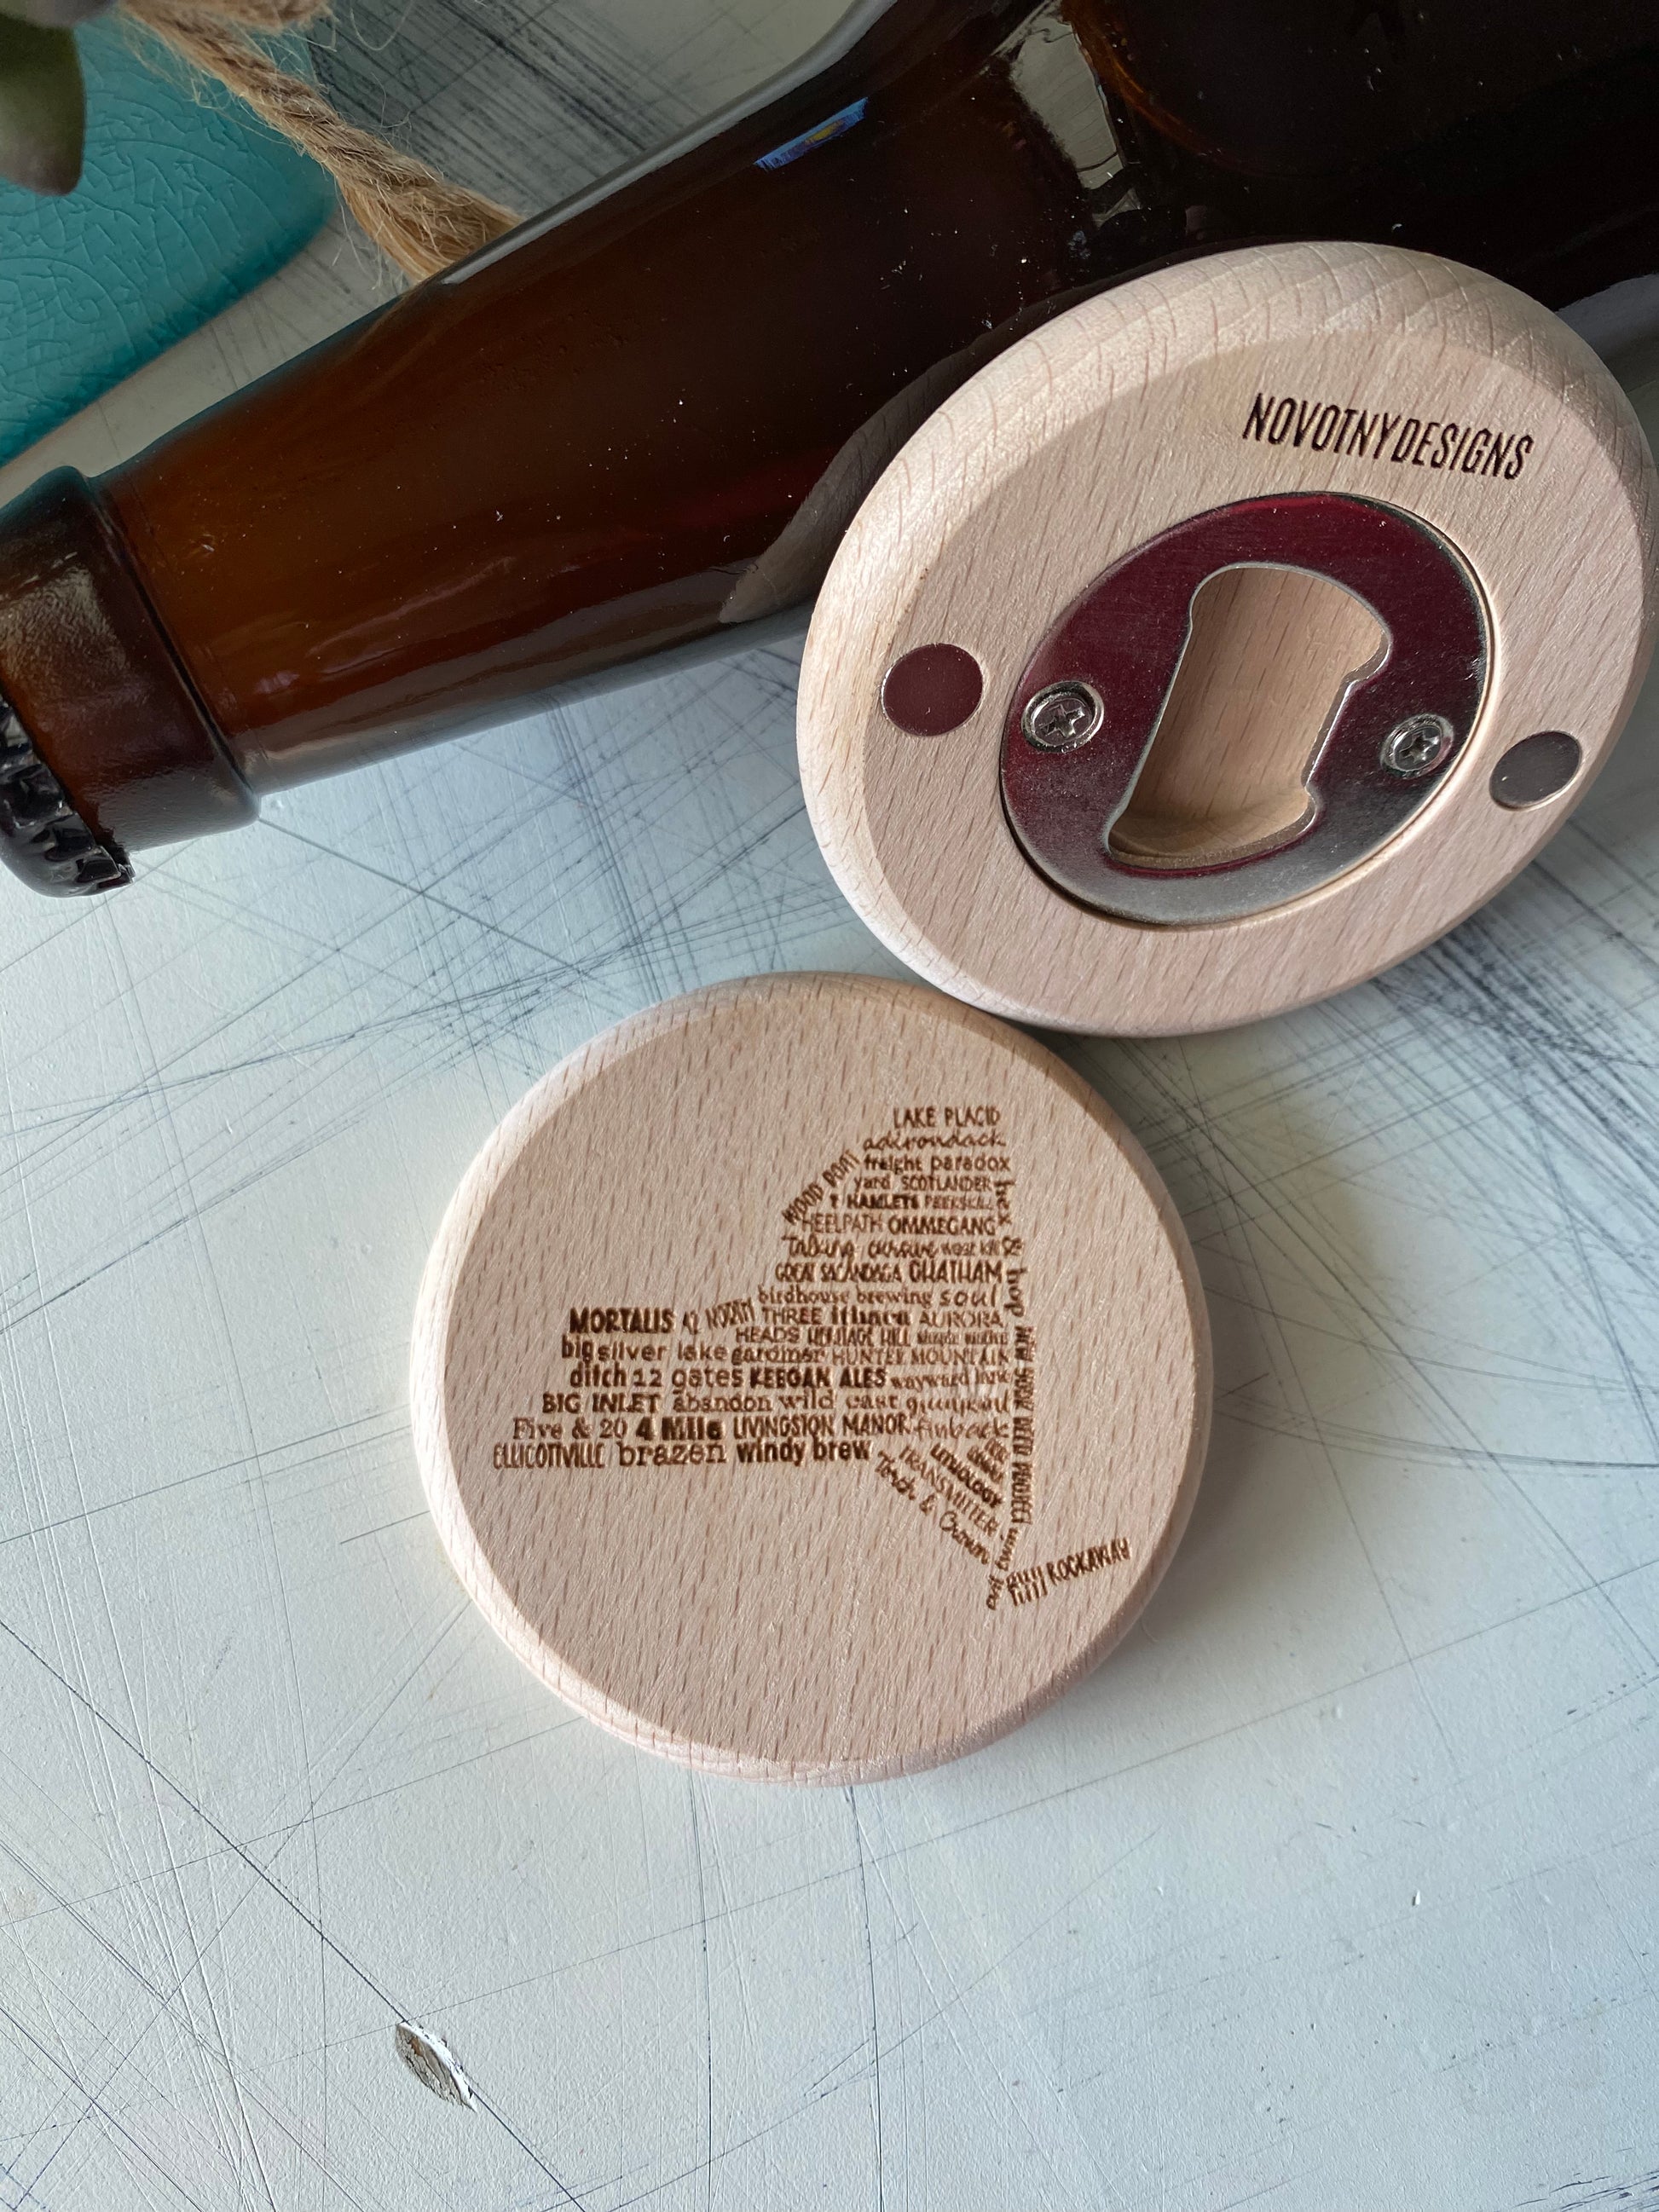 New York Breweries - Novotny Designs - magnetic engraved bottle opener